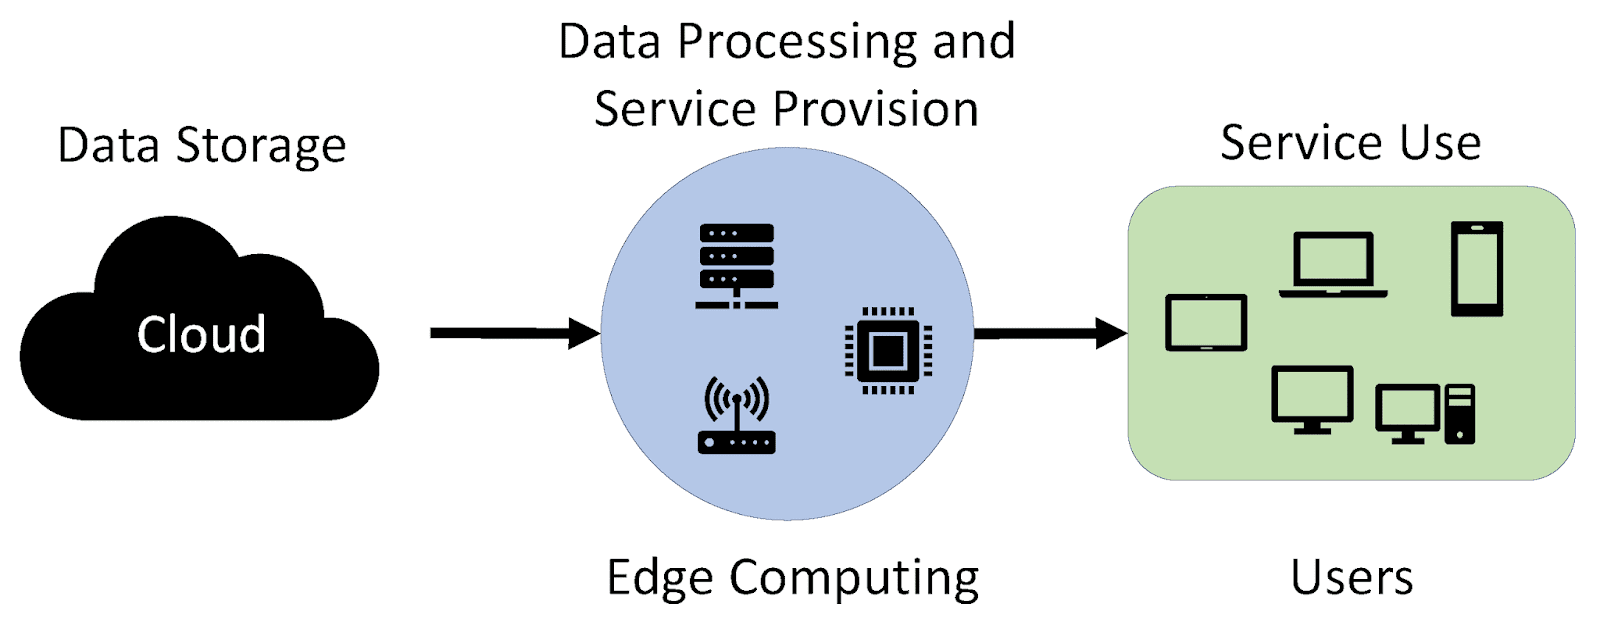 Edge Computing Data Processing